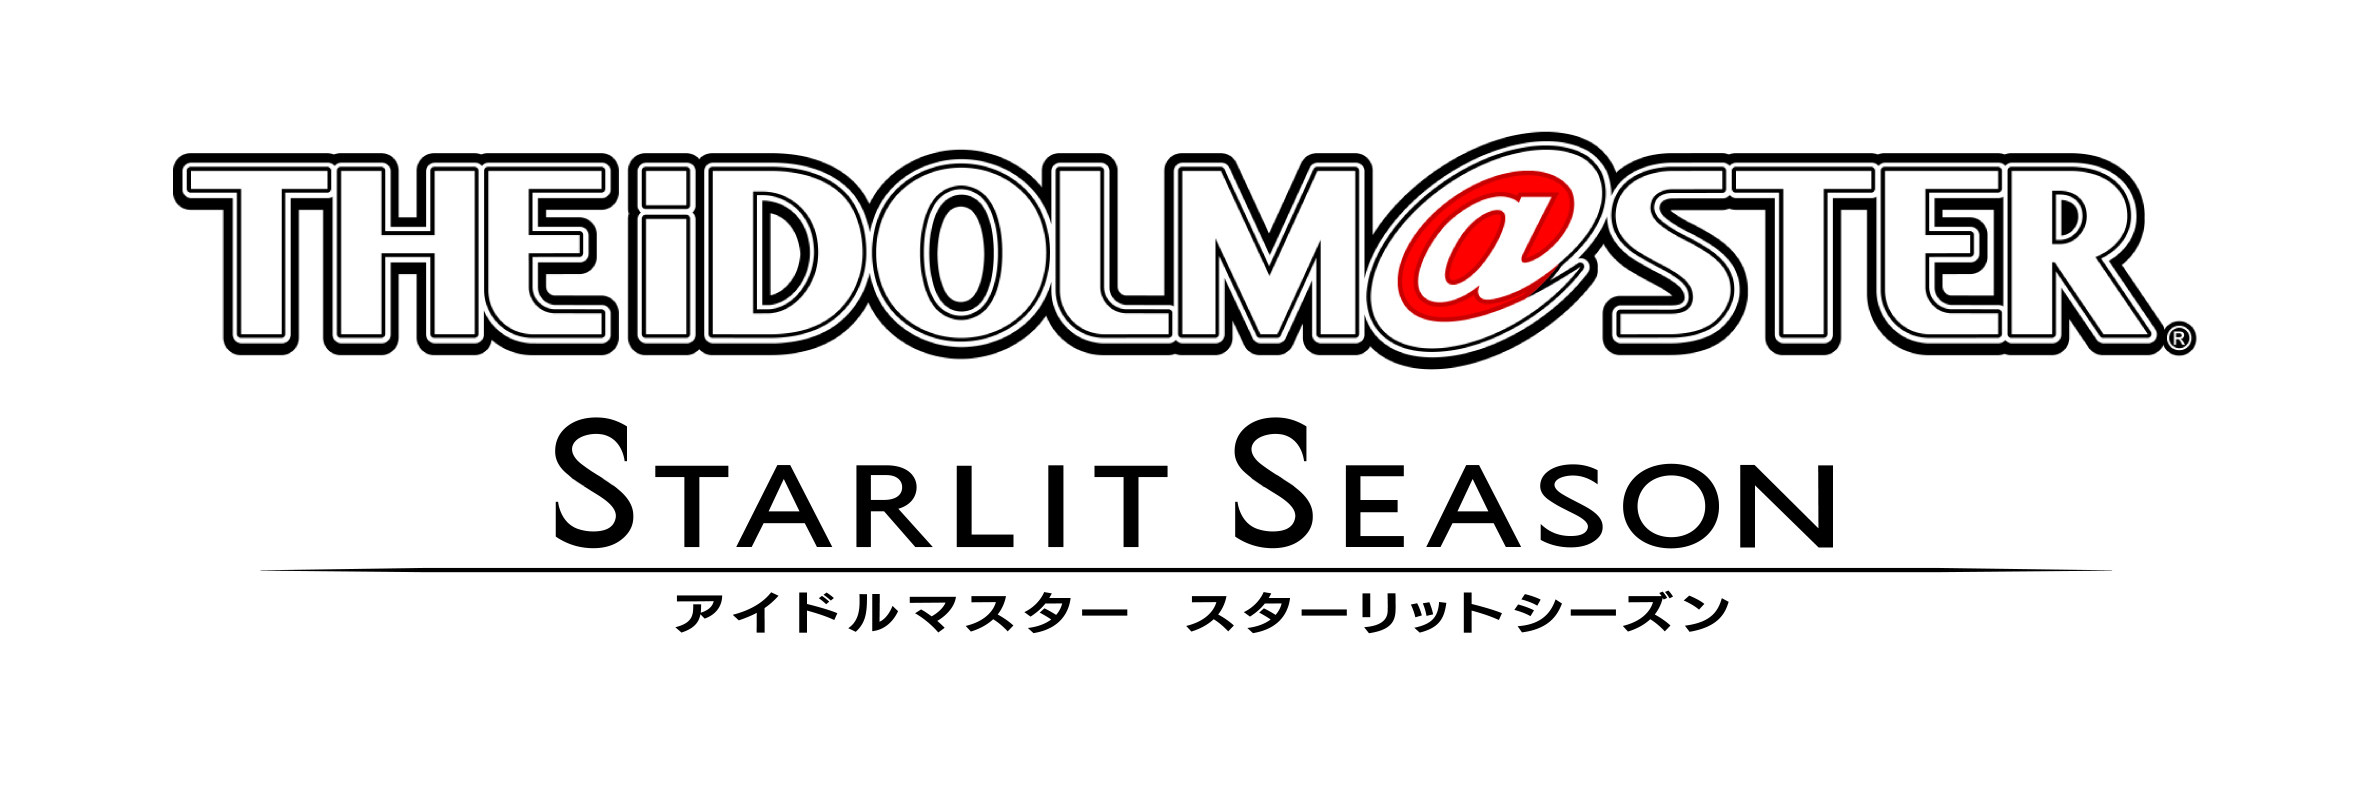 Playstation 4 Steam The Idolm Ster Starlit Season 5月27日発売決定 新アイドル公開のお知らせ 株式会社バンダイナムコエンターテインメントのプレスリリース